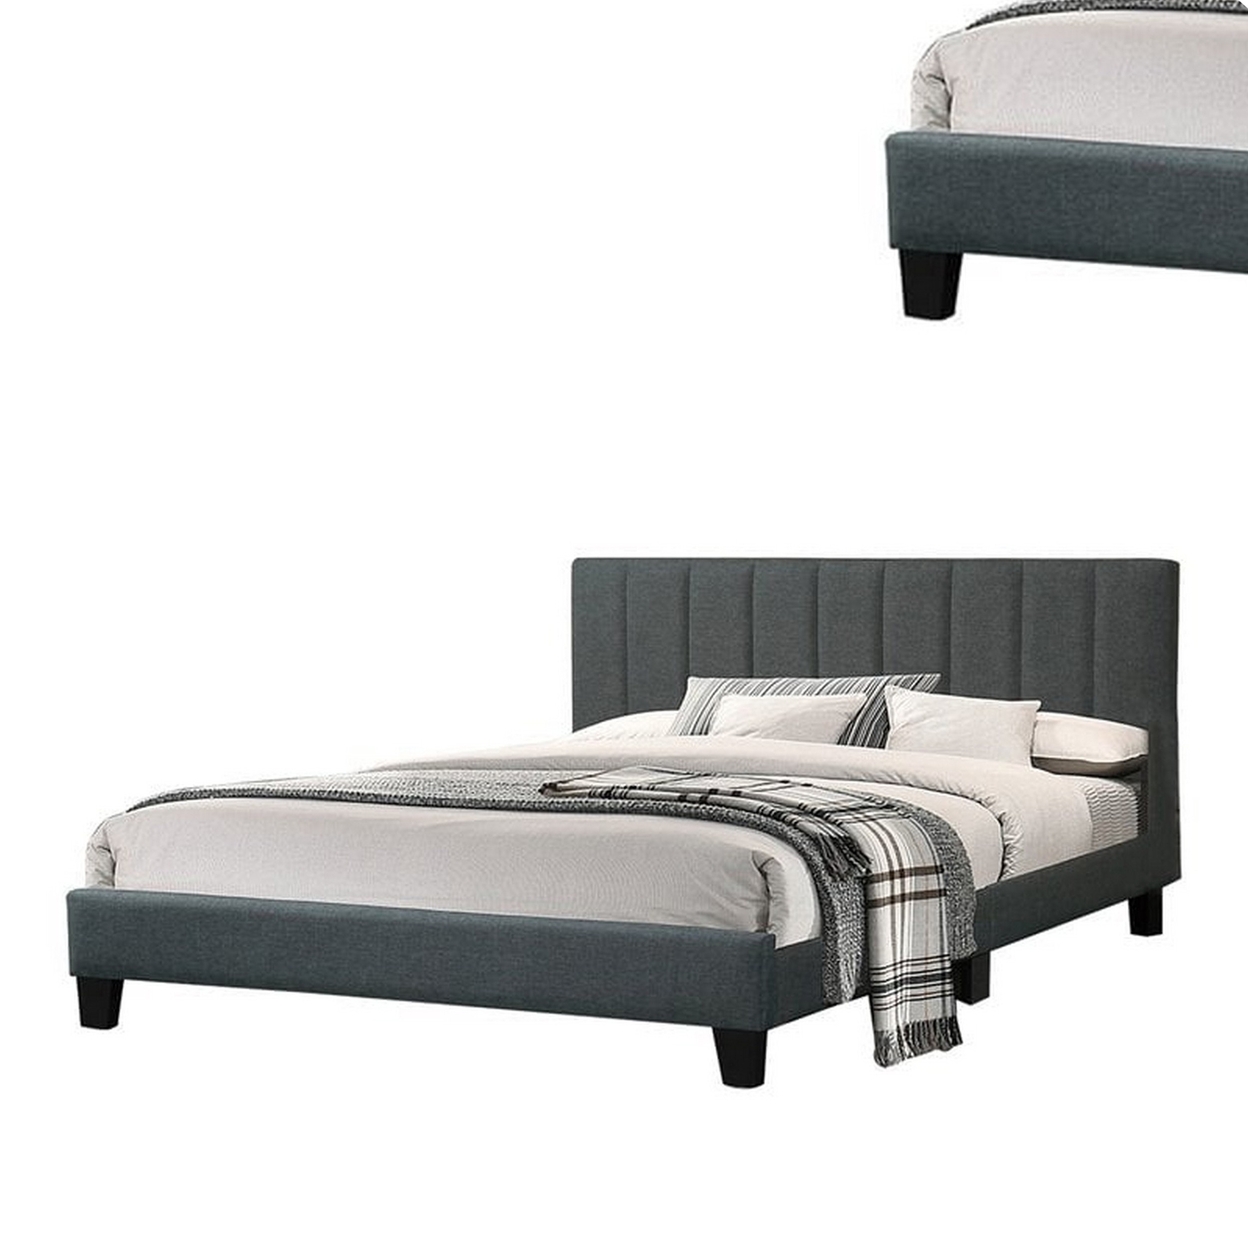 Eve Platform Full Size Bed, Vertical Channel Tufting, Charcoal Upholstery- Saltoro Sherpi